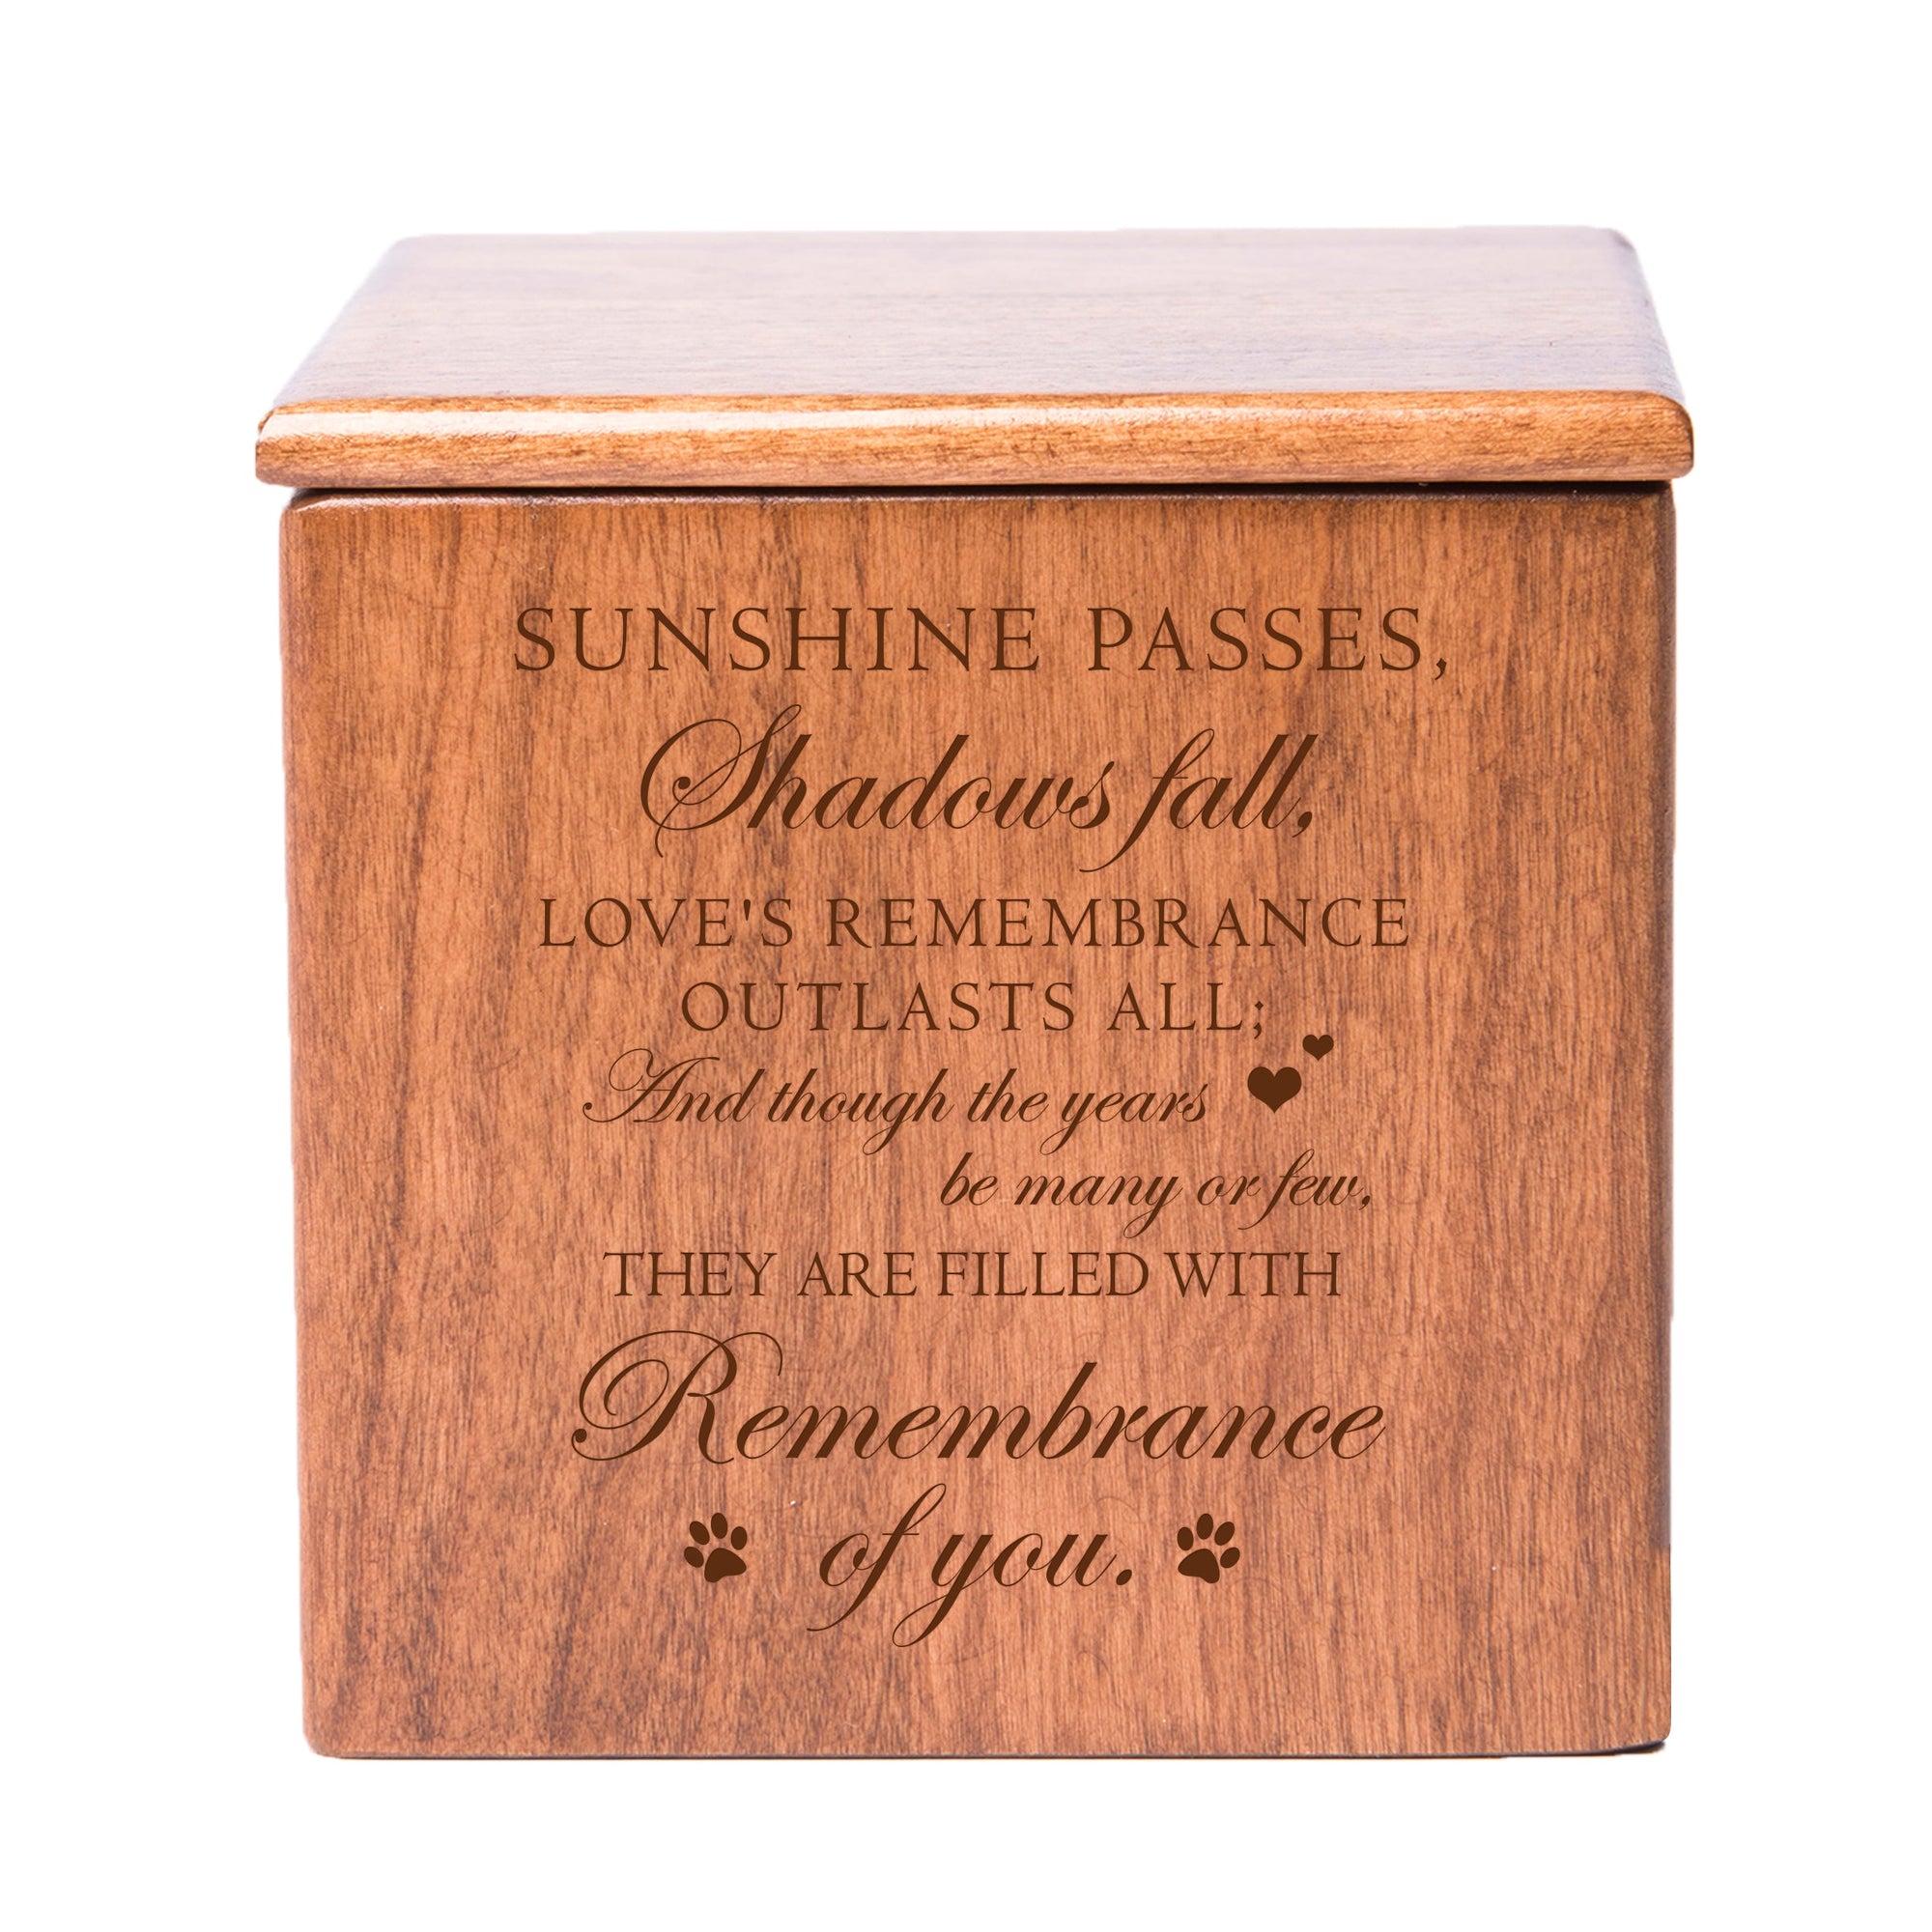 Pet Memorial Keepsake Cremation Urn Box for Dog or Cat - Sunshine Passes, Shadows Fall